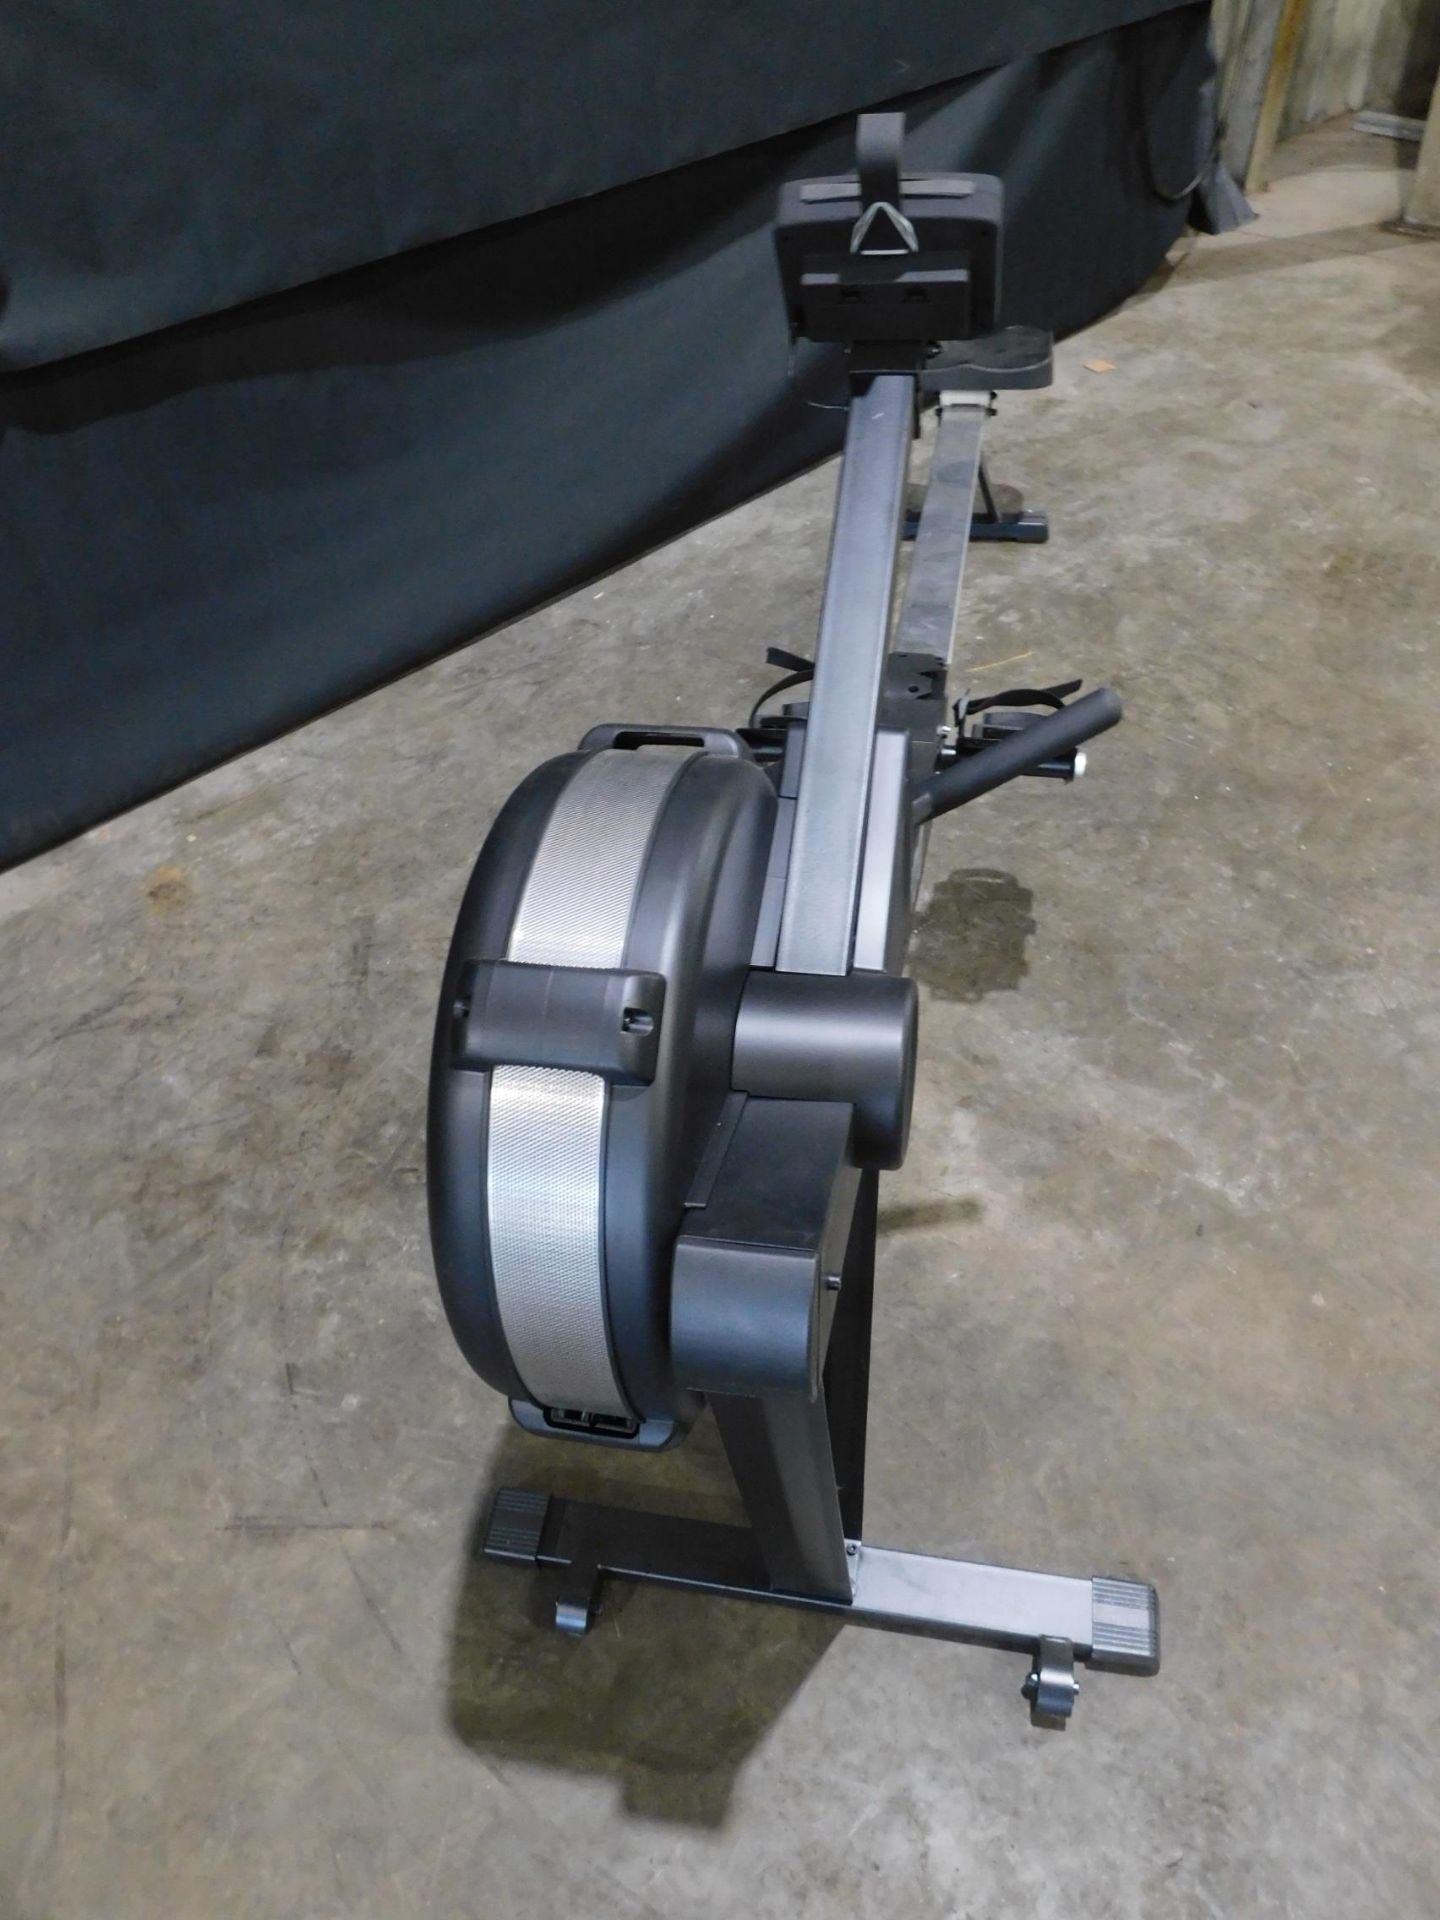 Body Solid Endurance R300 Rowing Machine-Demonstrator Model, NOTE: Broken Plastic Piece on Seat - Image 2 of 11